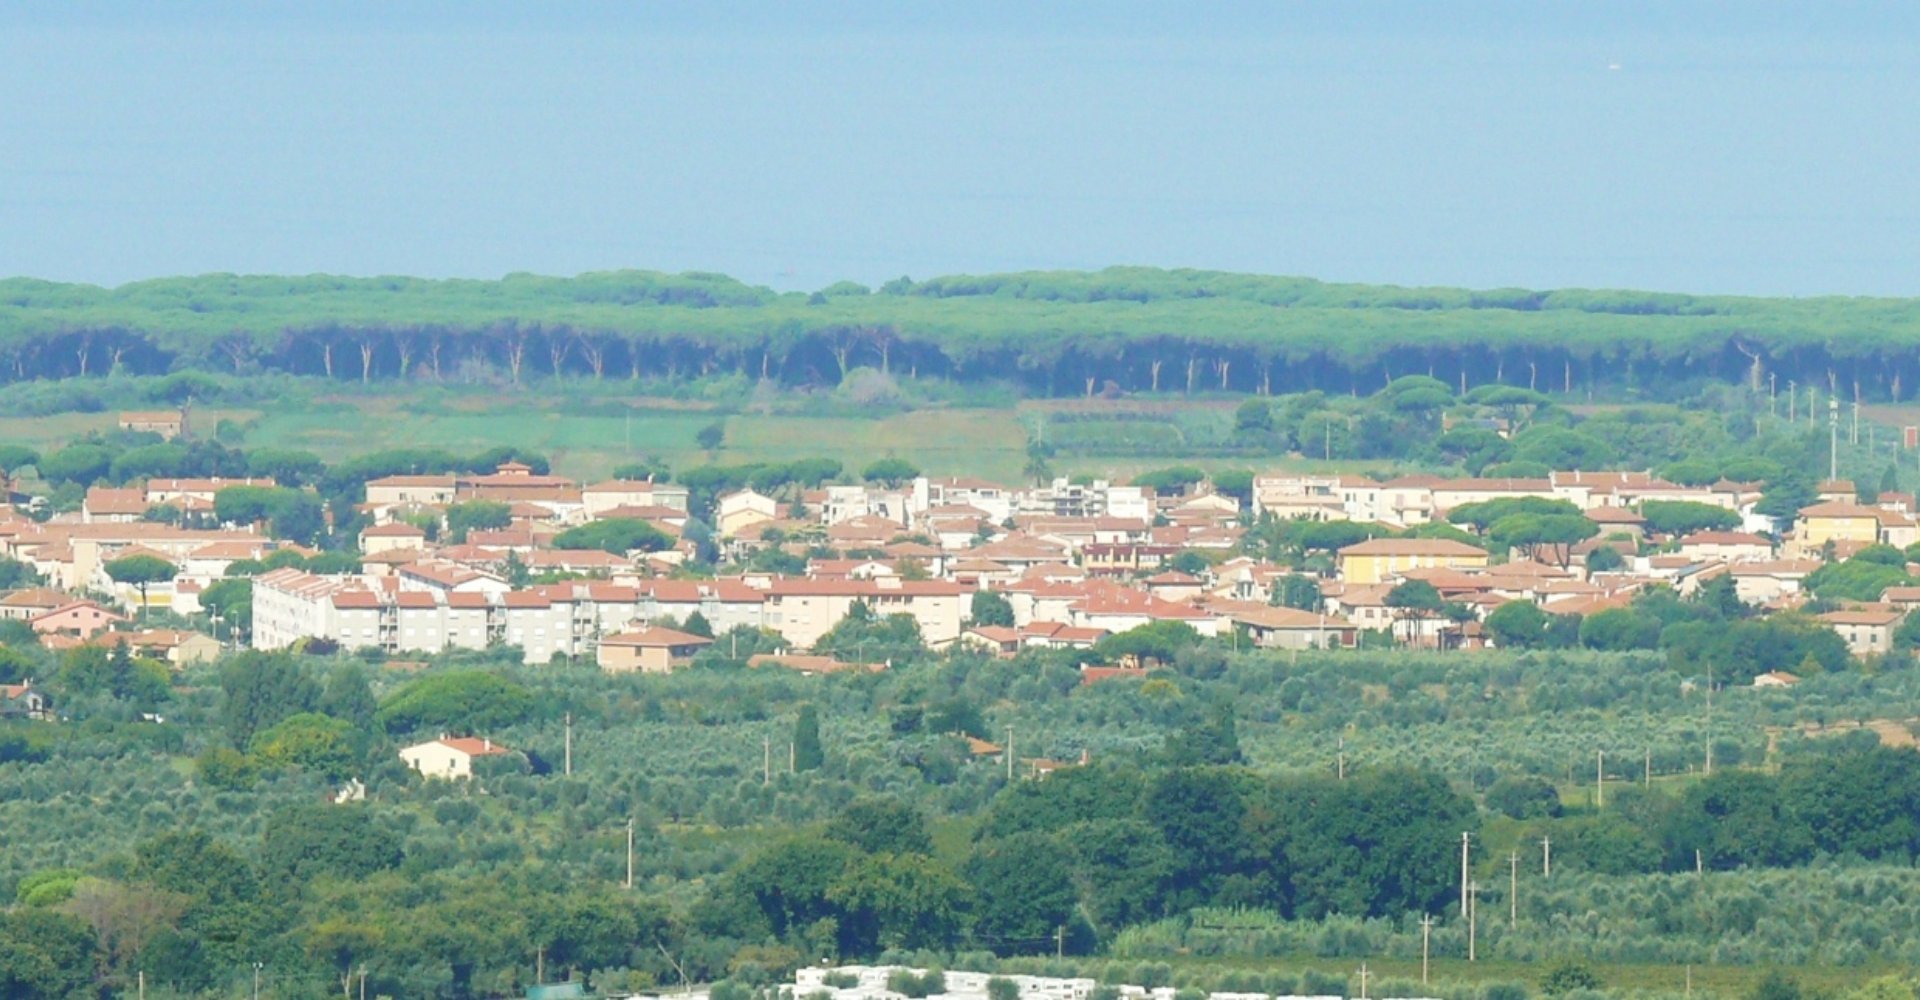 Panorama di Donoratico, Toscana